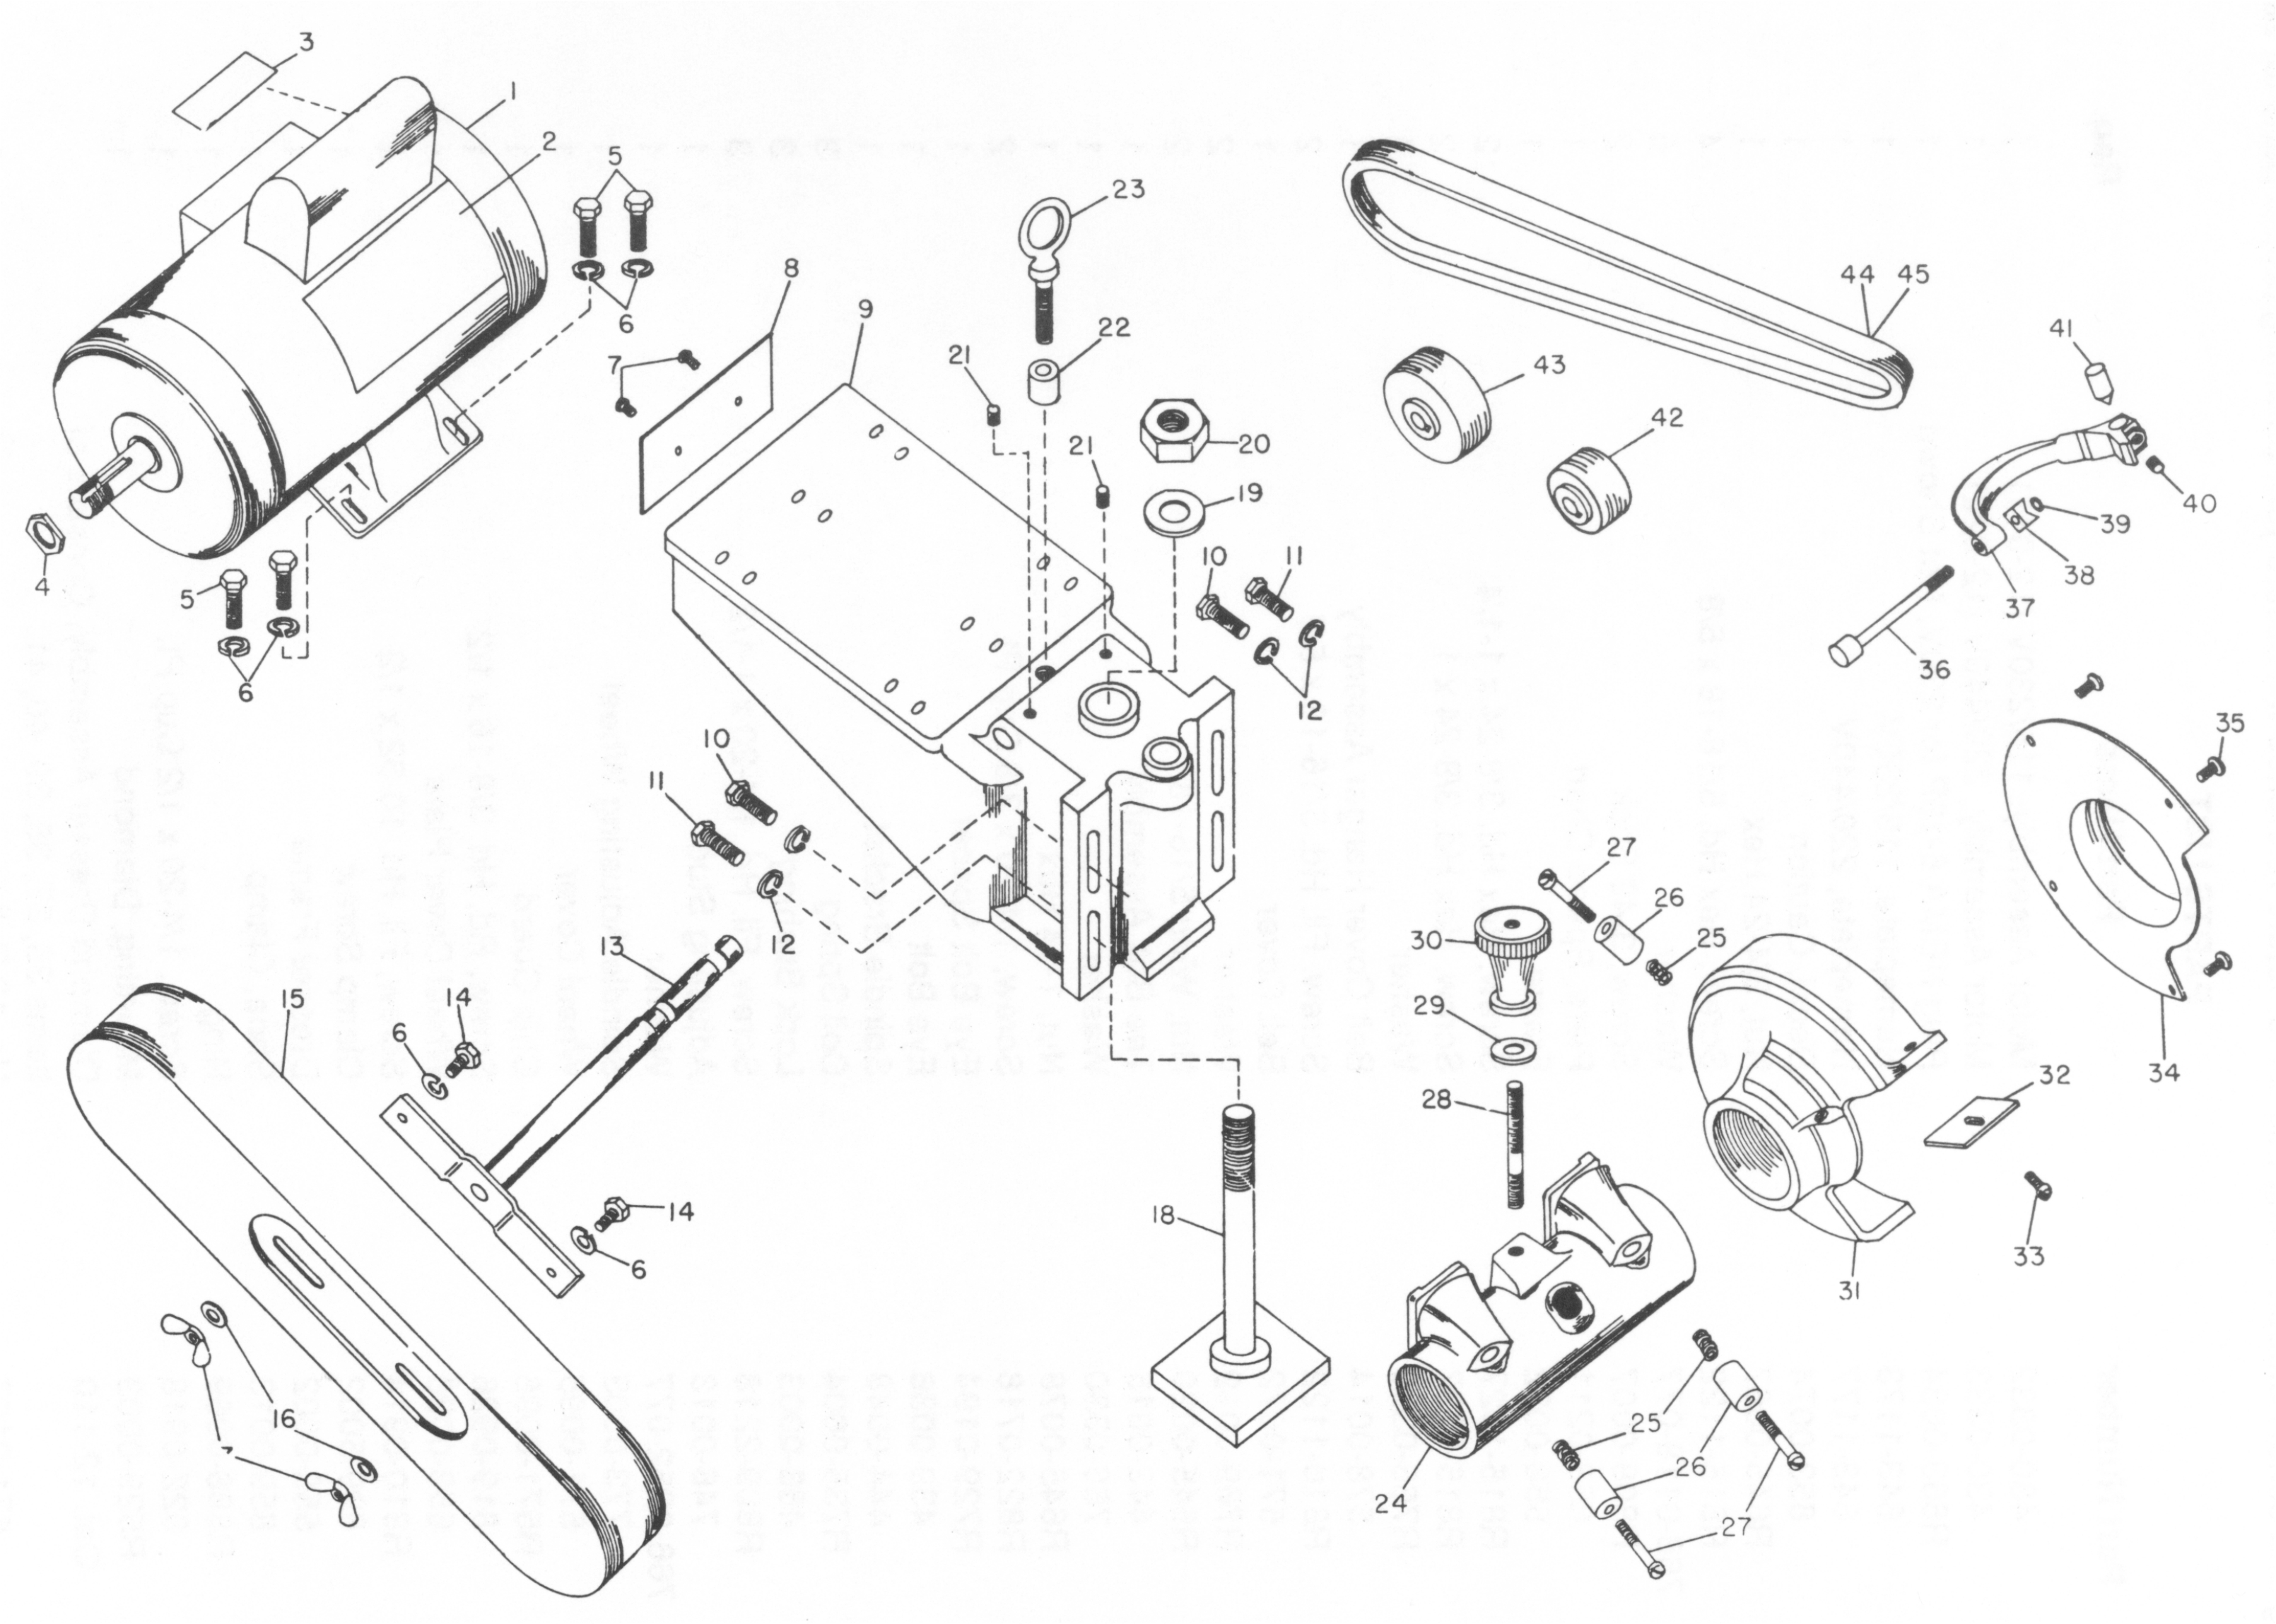 Tool Post Grinder Replacement Parts | Dumore Series 12 Tool Post Grinders